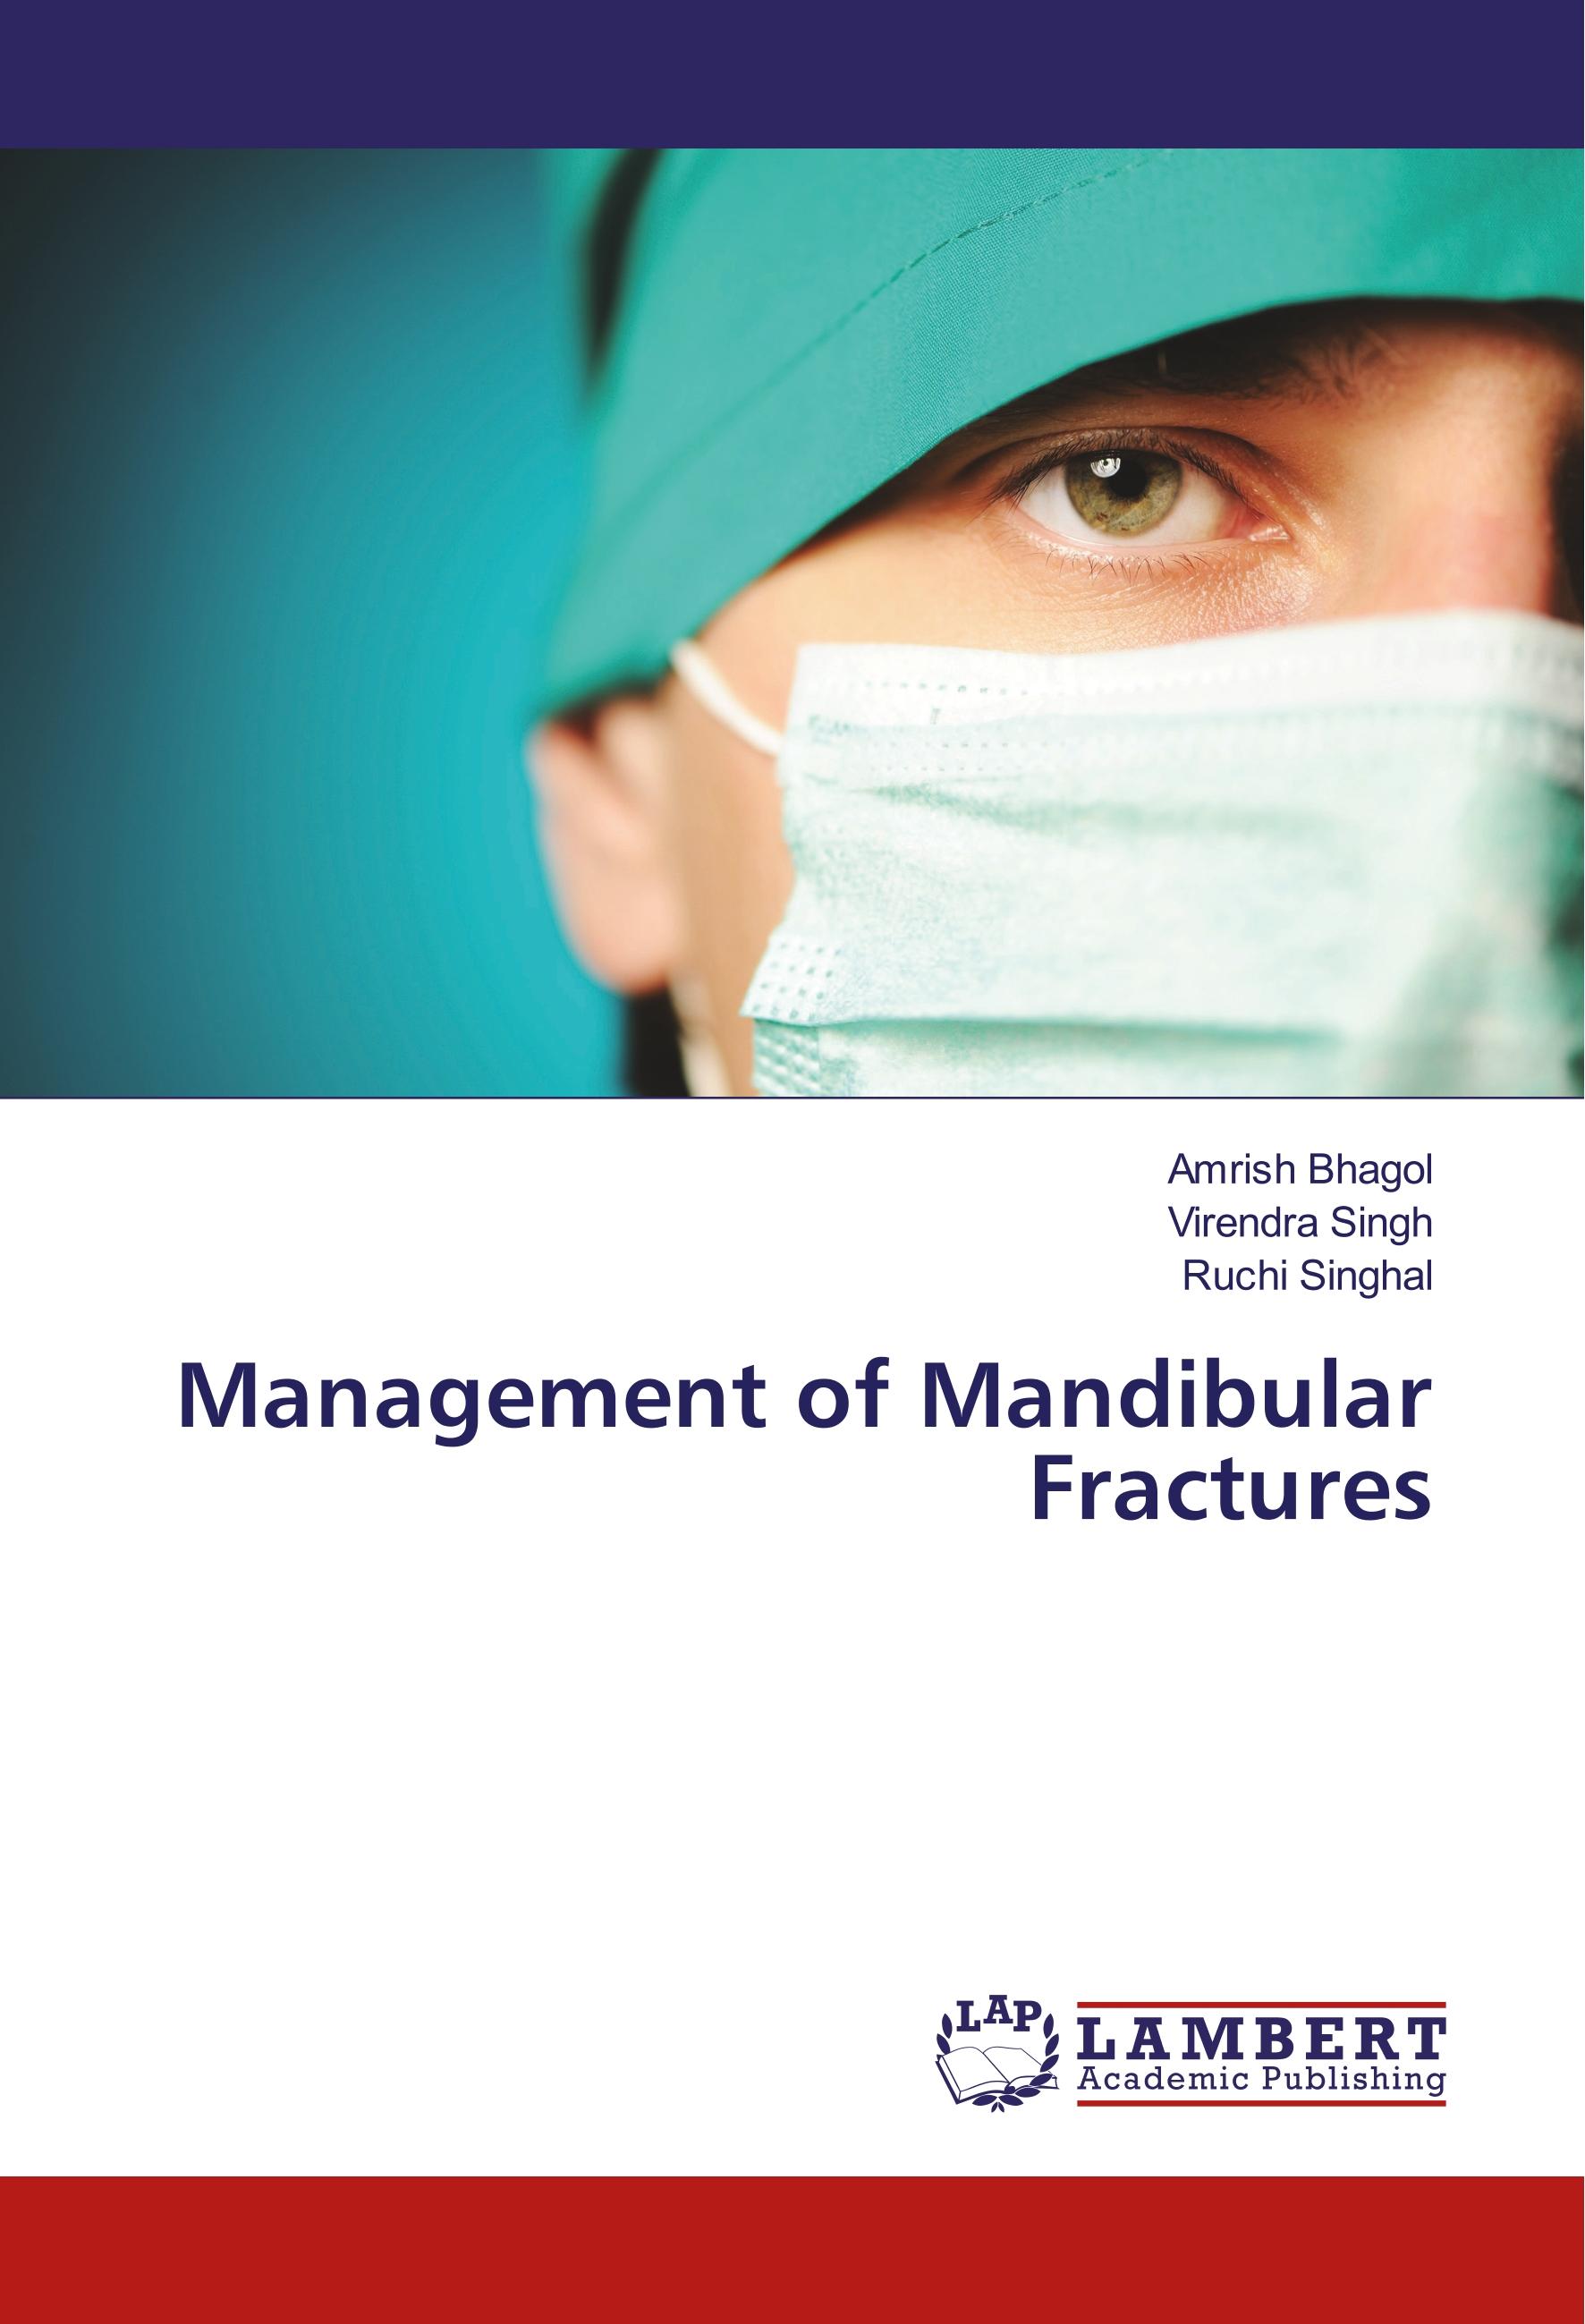 Management of Mandibular Fractures - Amrish Bhagol Virendra Singh Ruchi Singhal